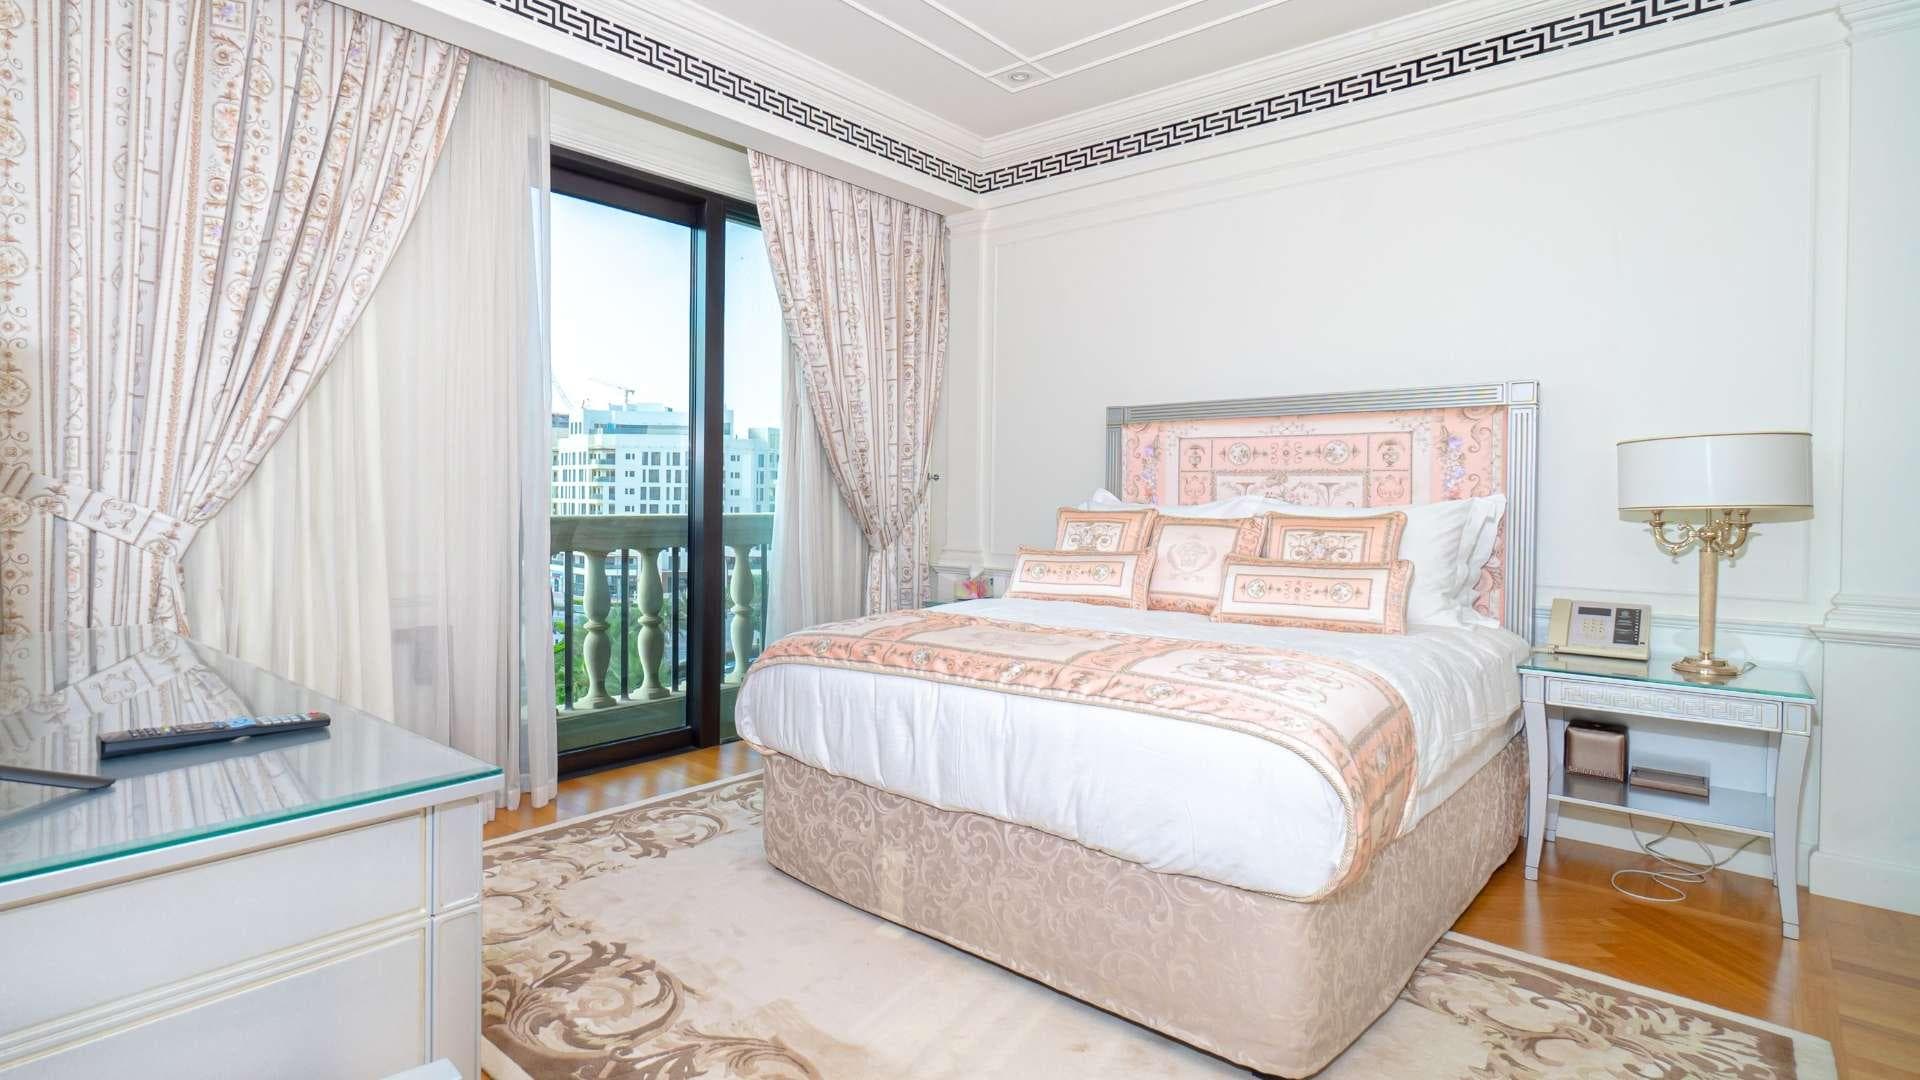 3 Bedroom Apartment For Sale Palazzo Versace Lp18598 2ac406f62620de00.jpg